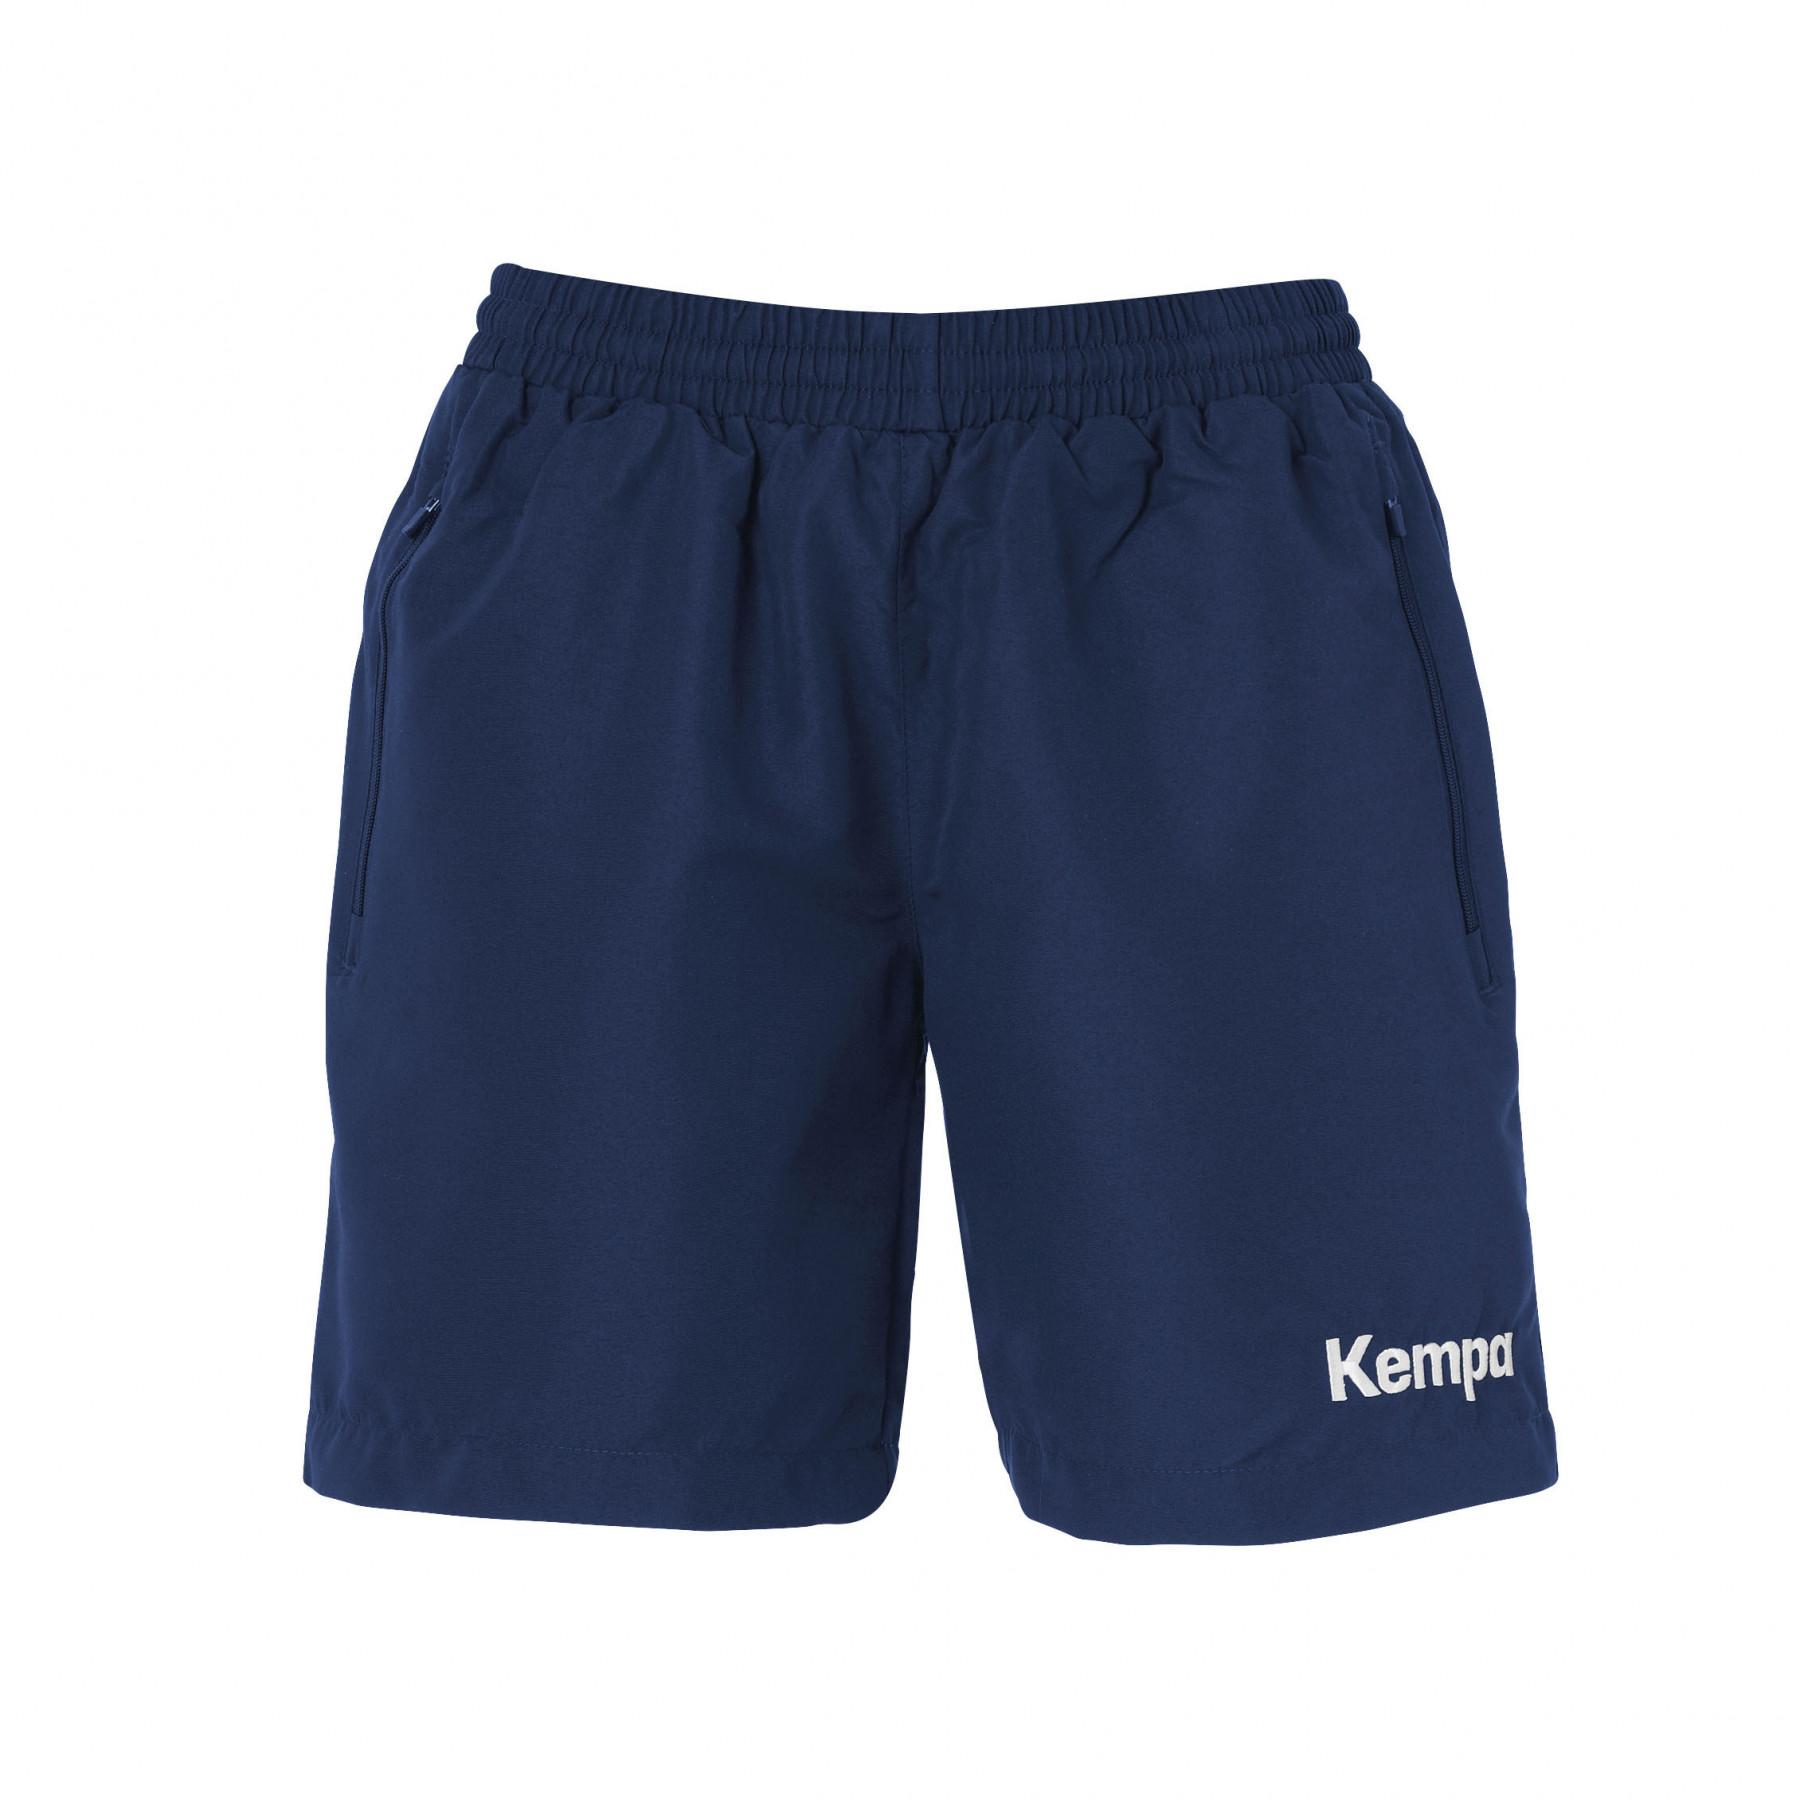 Pantaloncini Kempa Woven blu marino